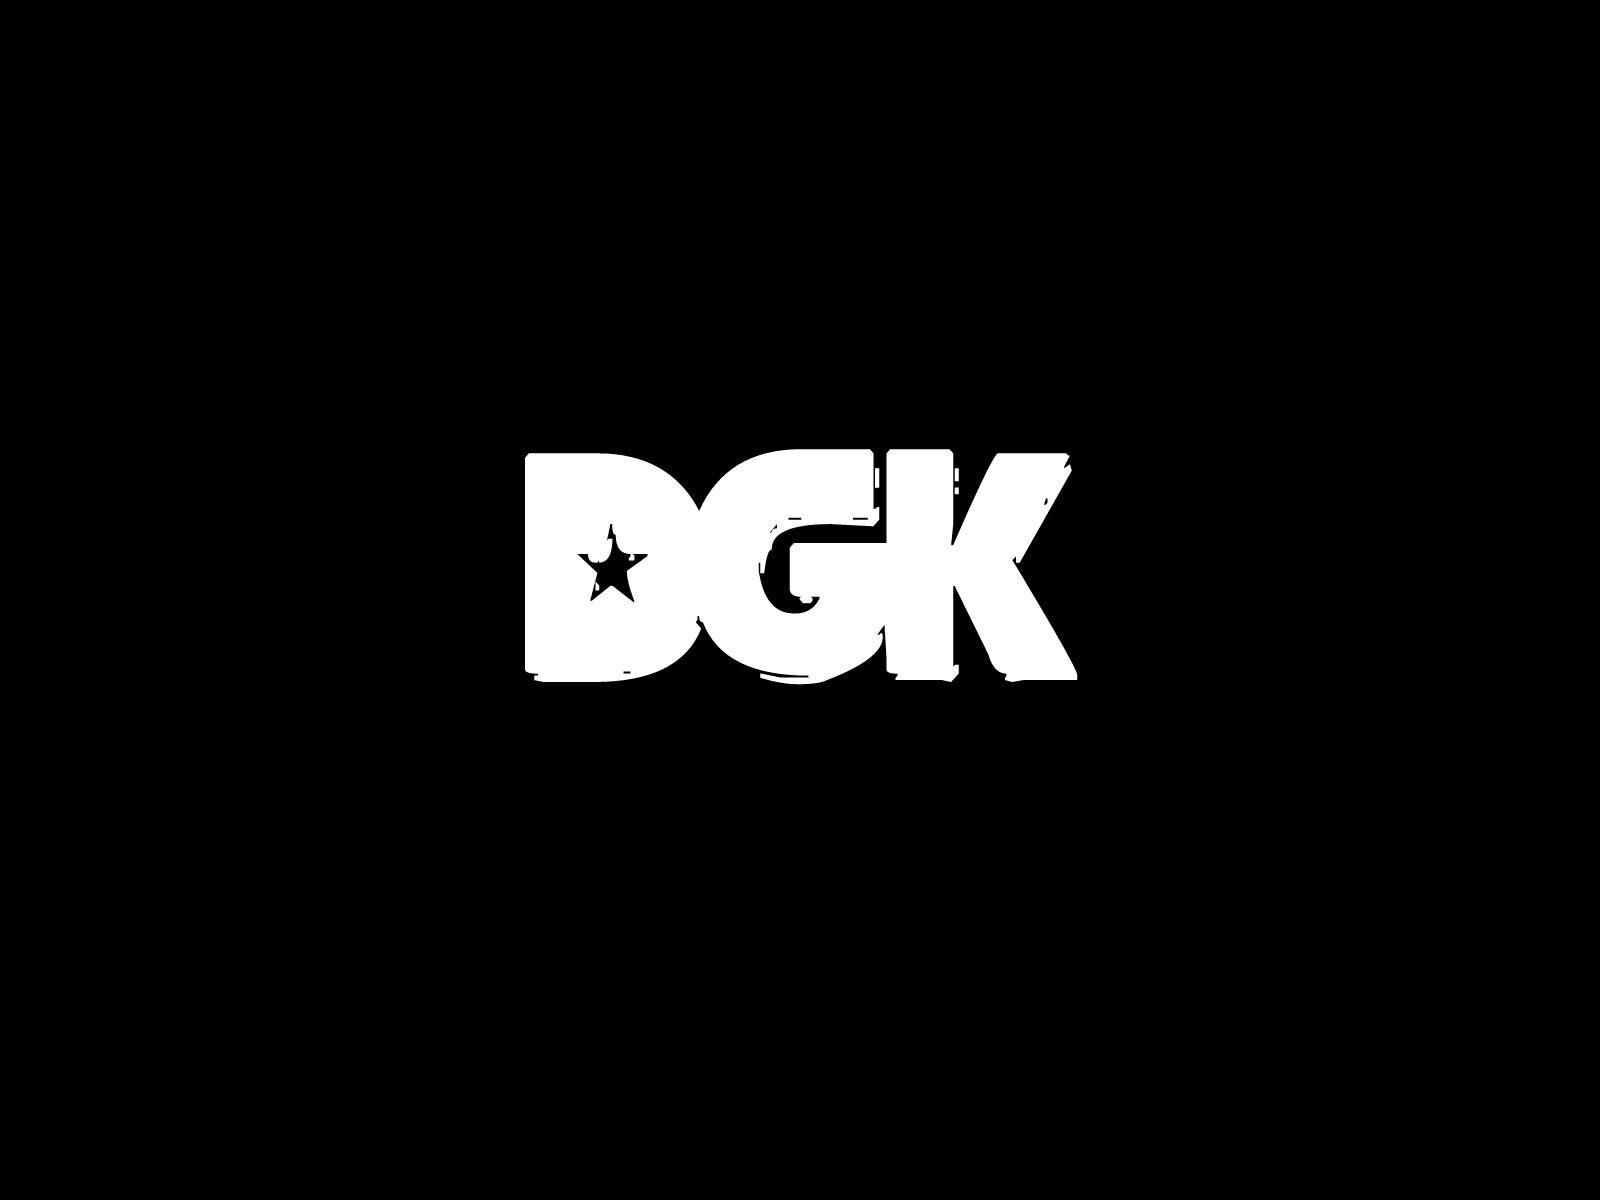 Awesome Logos Desktop Background: DGK 4K Ultra HD. .Ssoflx